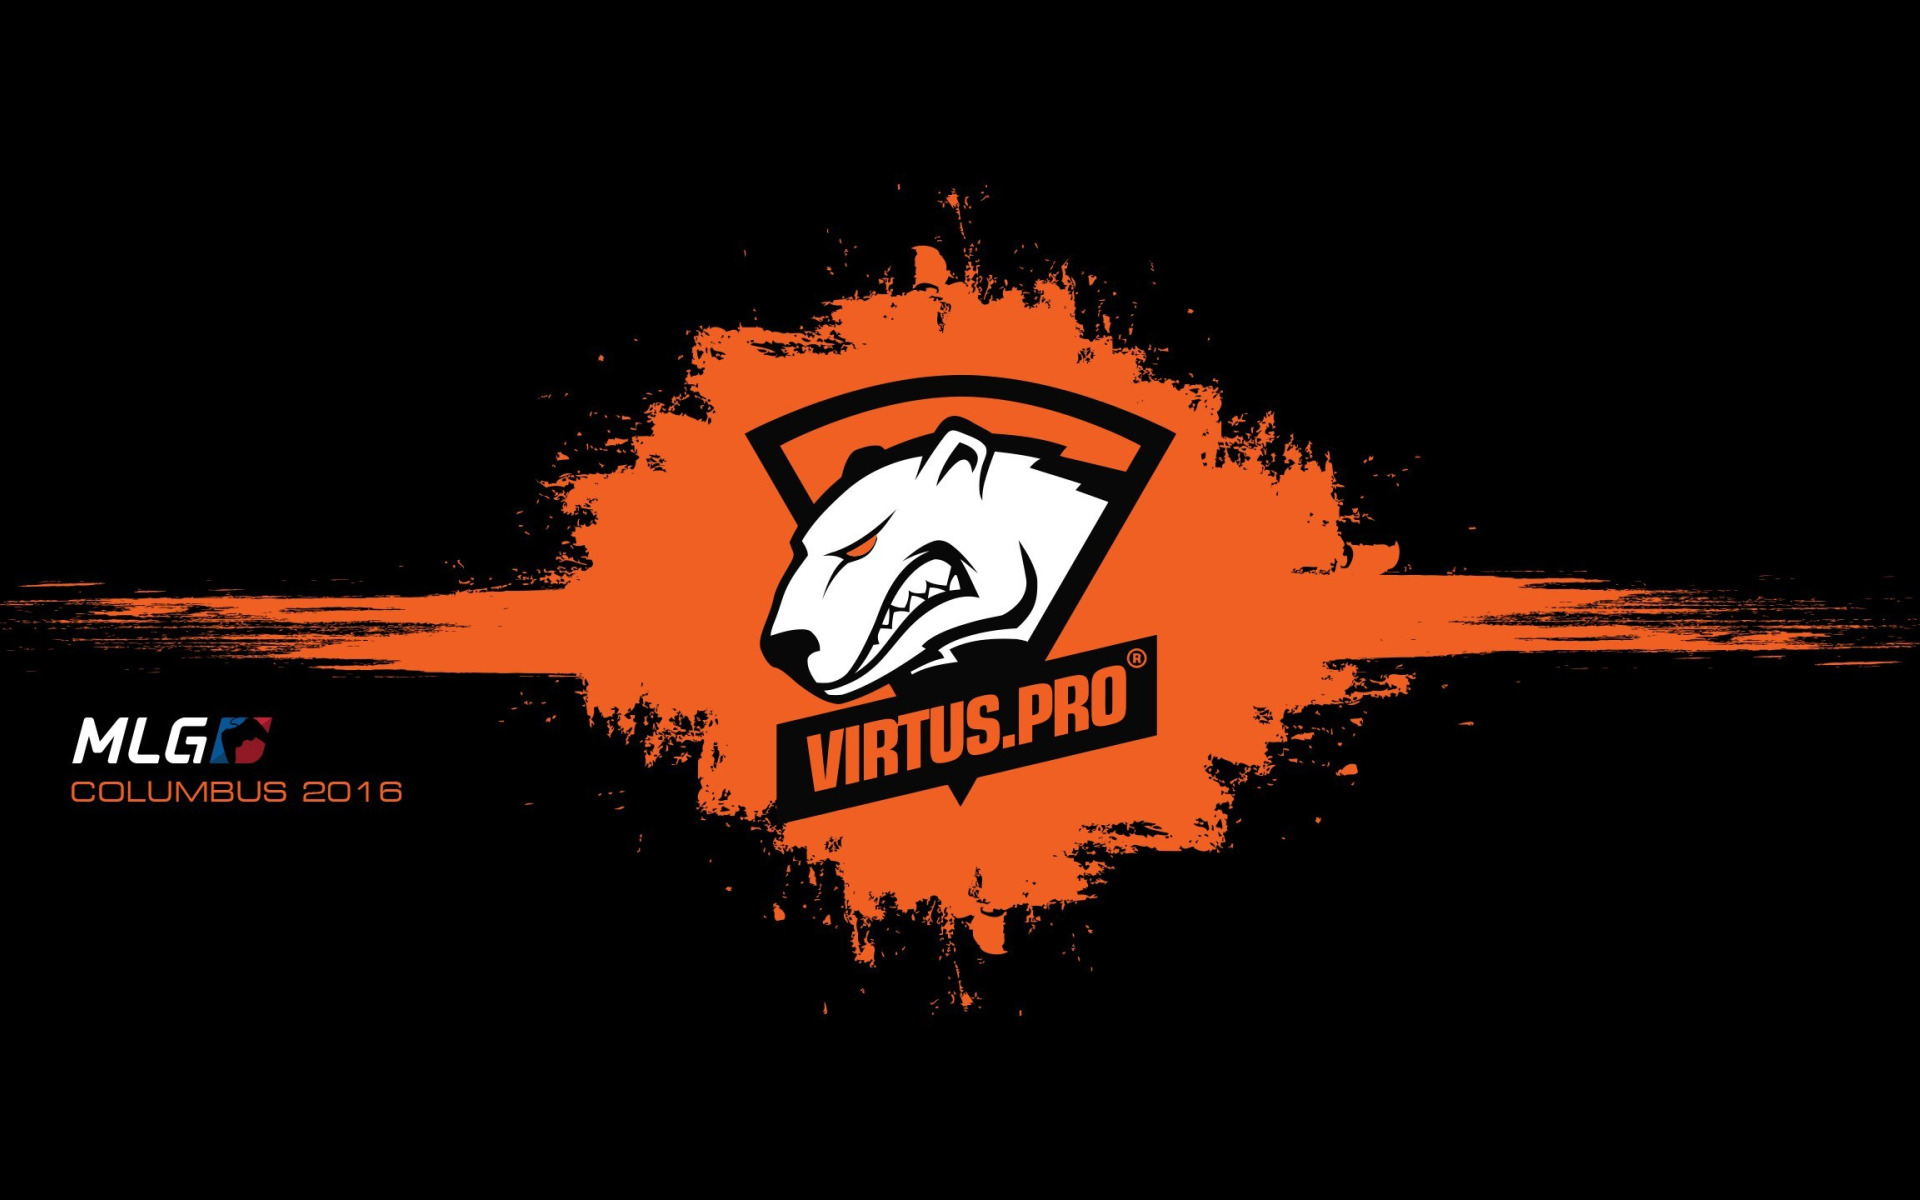 КС го Virtus Pro. Virtus Pro CS go logo. Vartu Pro. Virtus Pro обои на рабочий стол. Virtus pro cs2